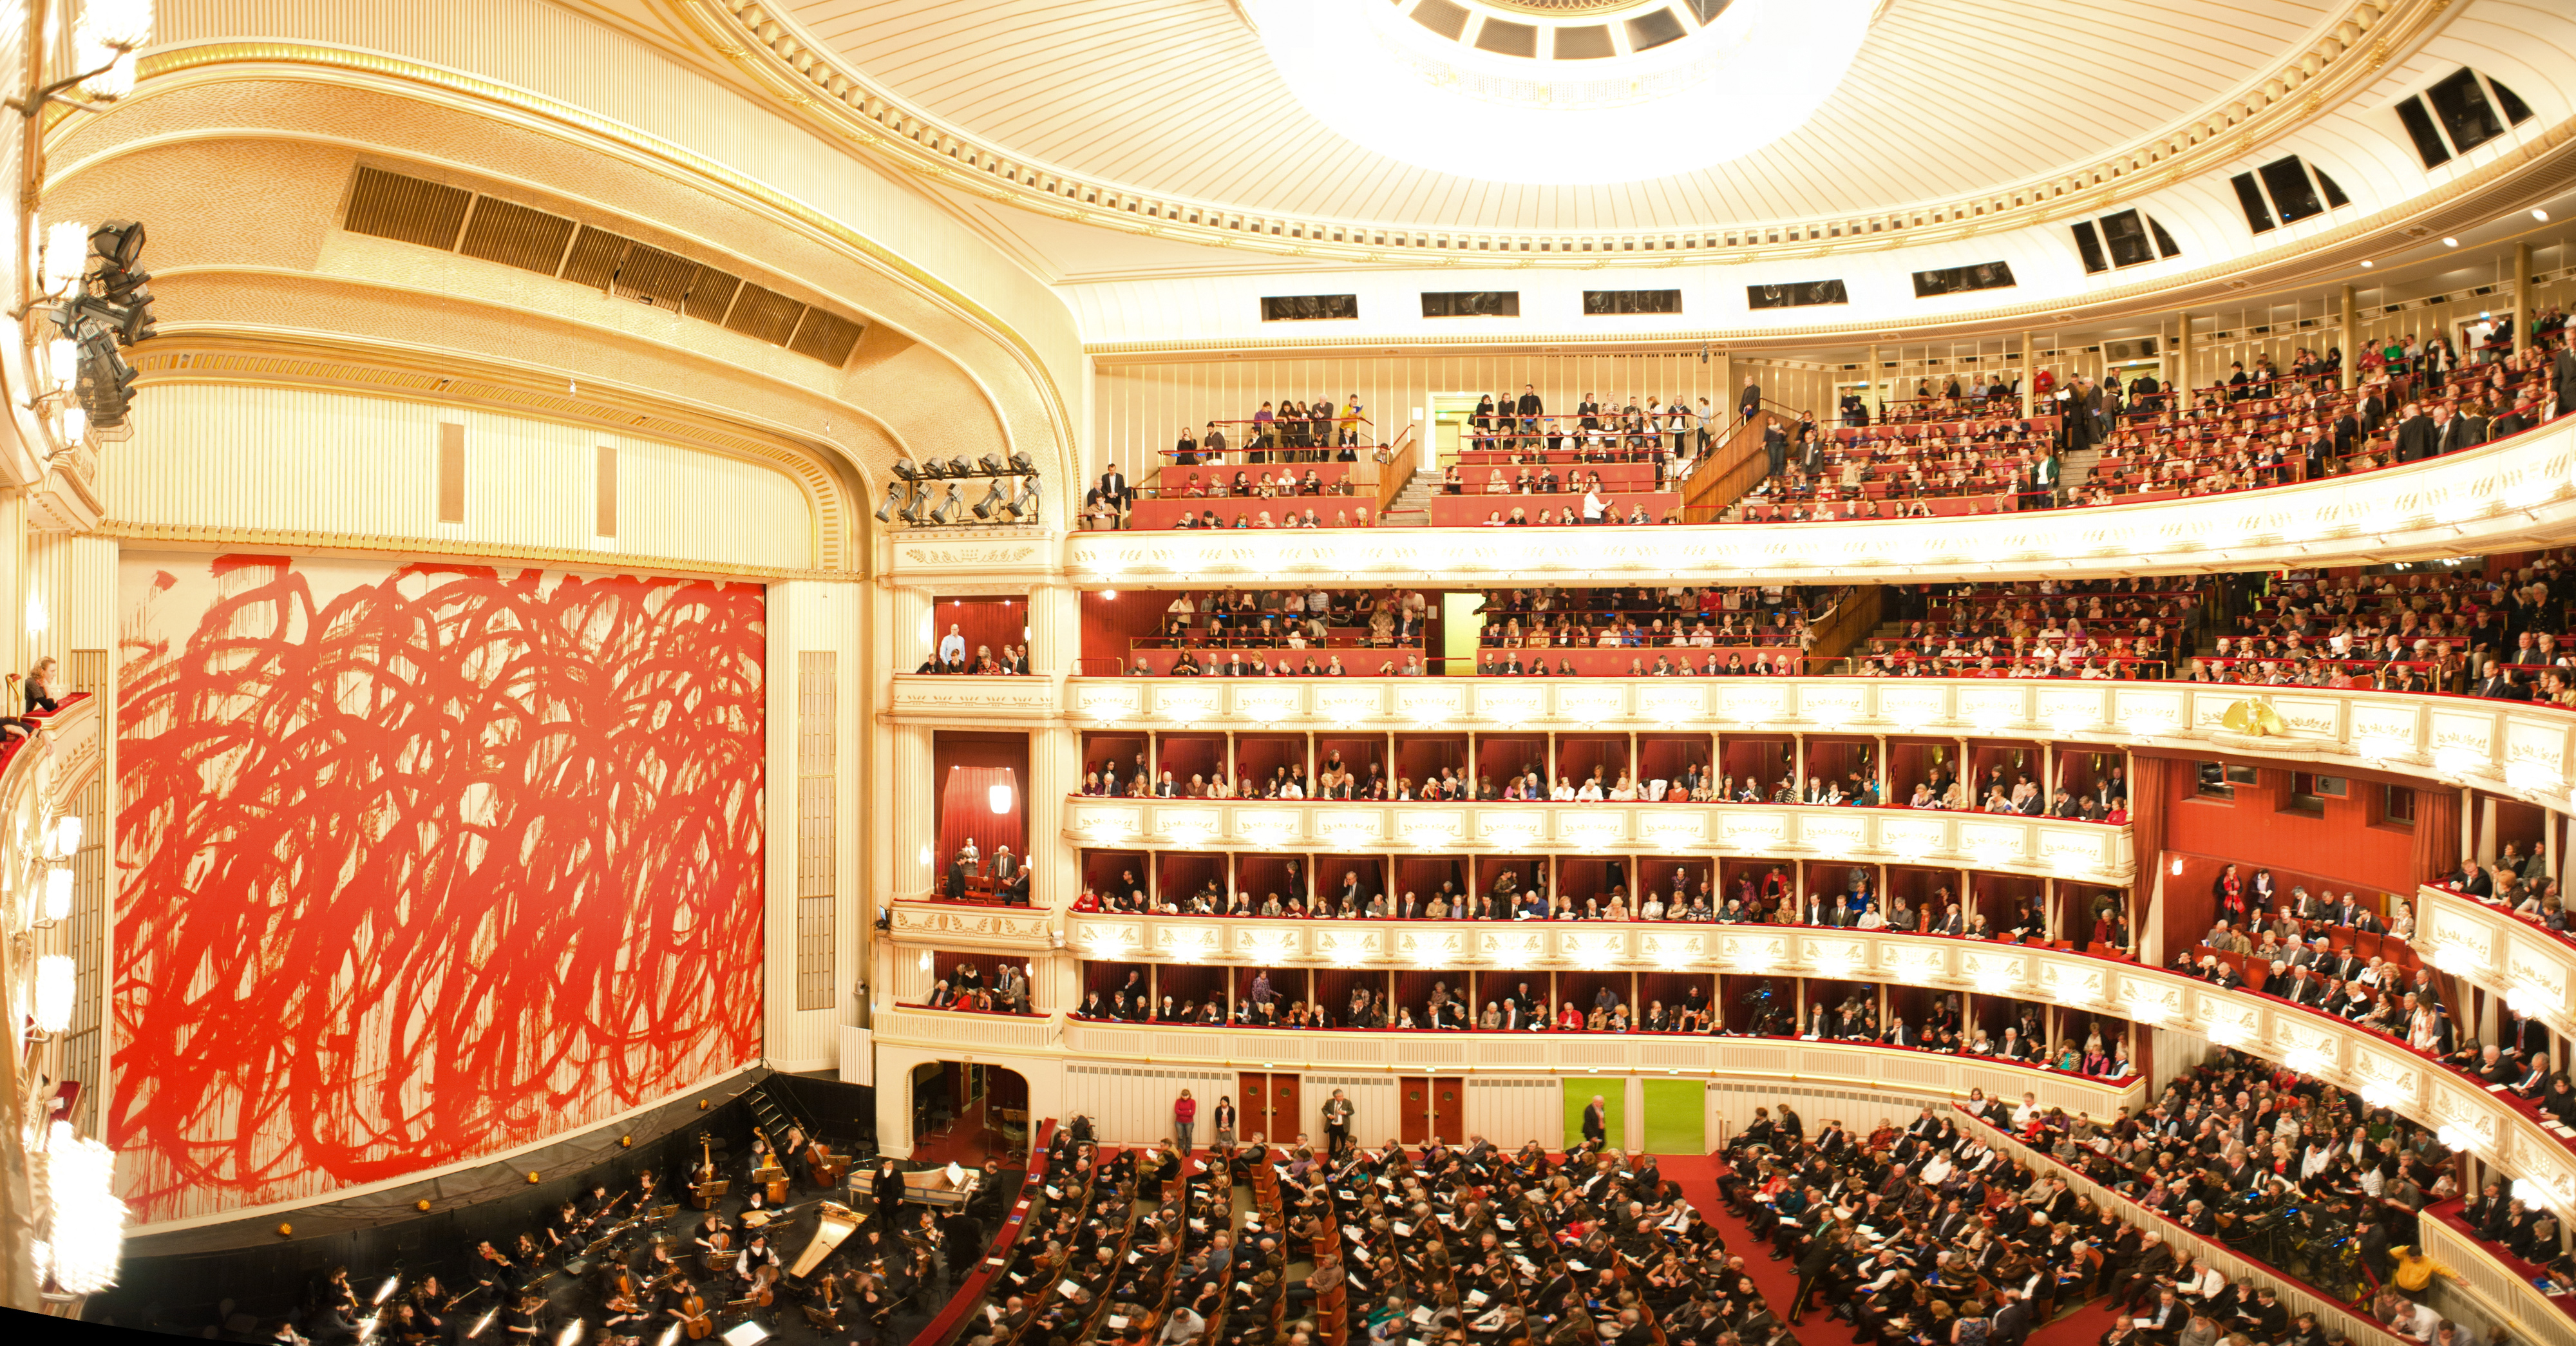 File:The Vienna State Opera (Wiener Staatsoper) interior. Vienna ...